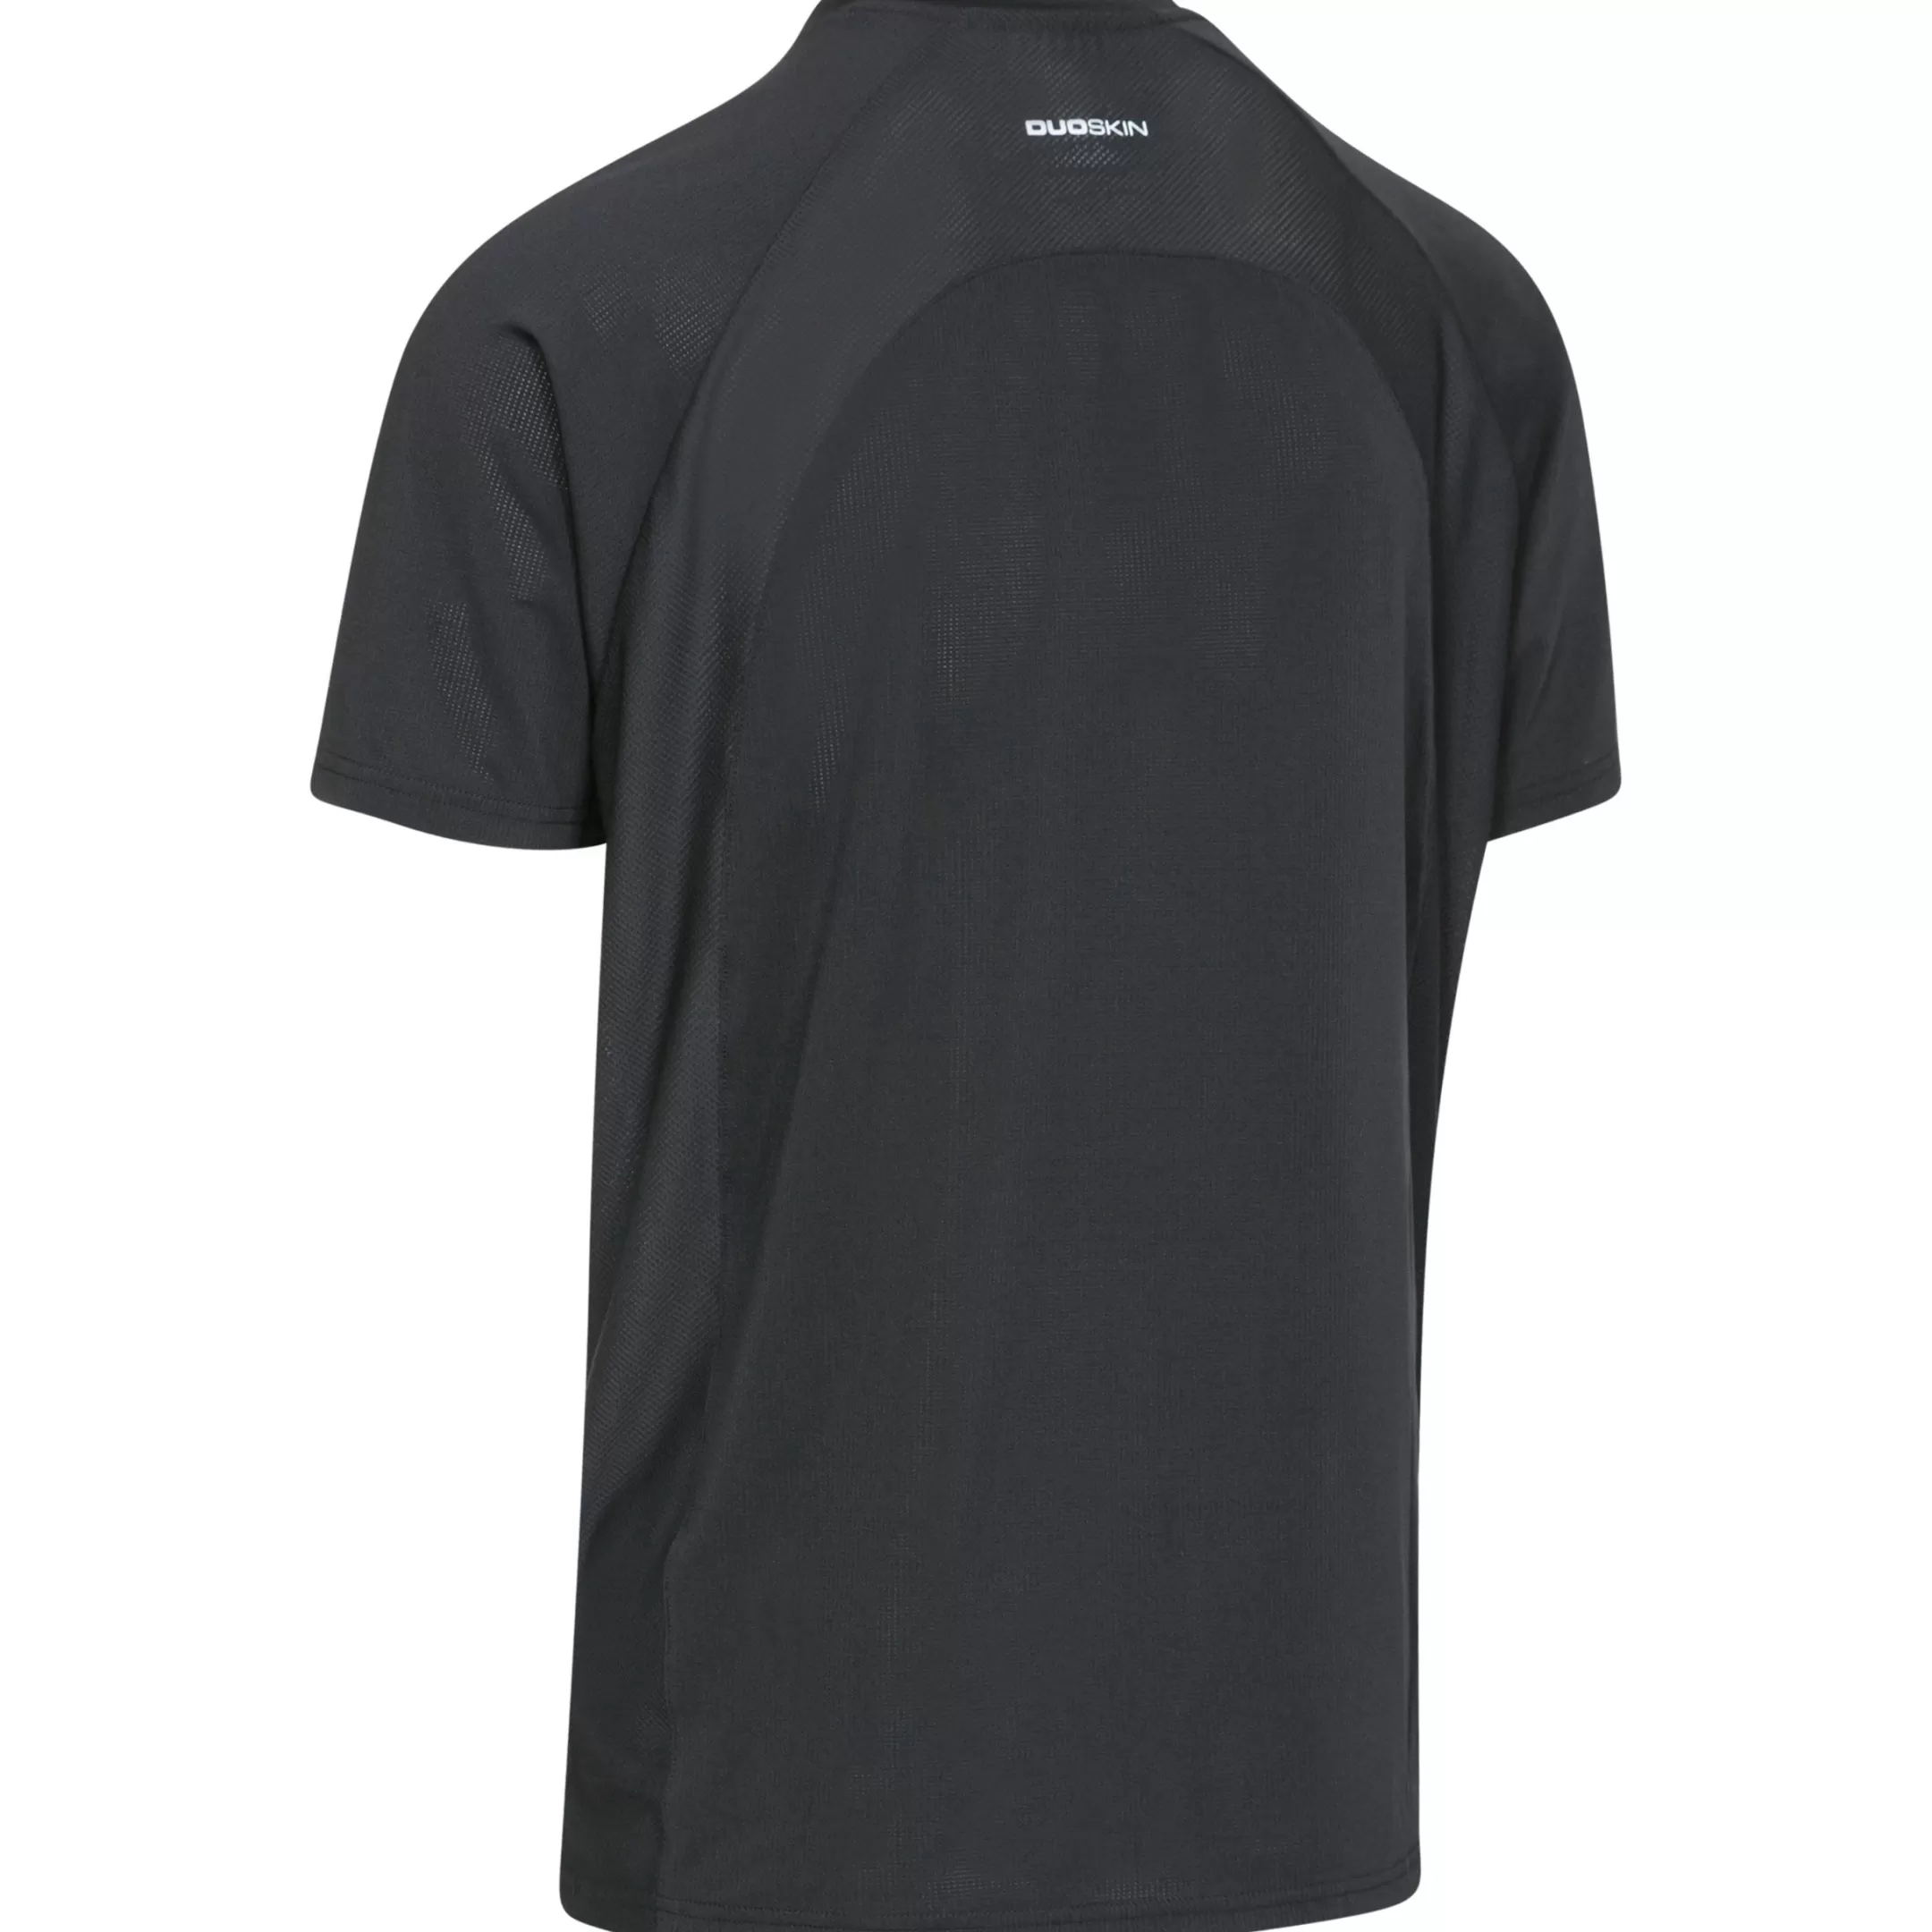 Men's Quick Dry Active T-shirt Cacama | Trespass Store